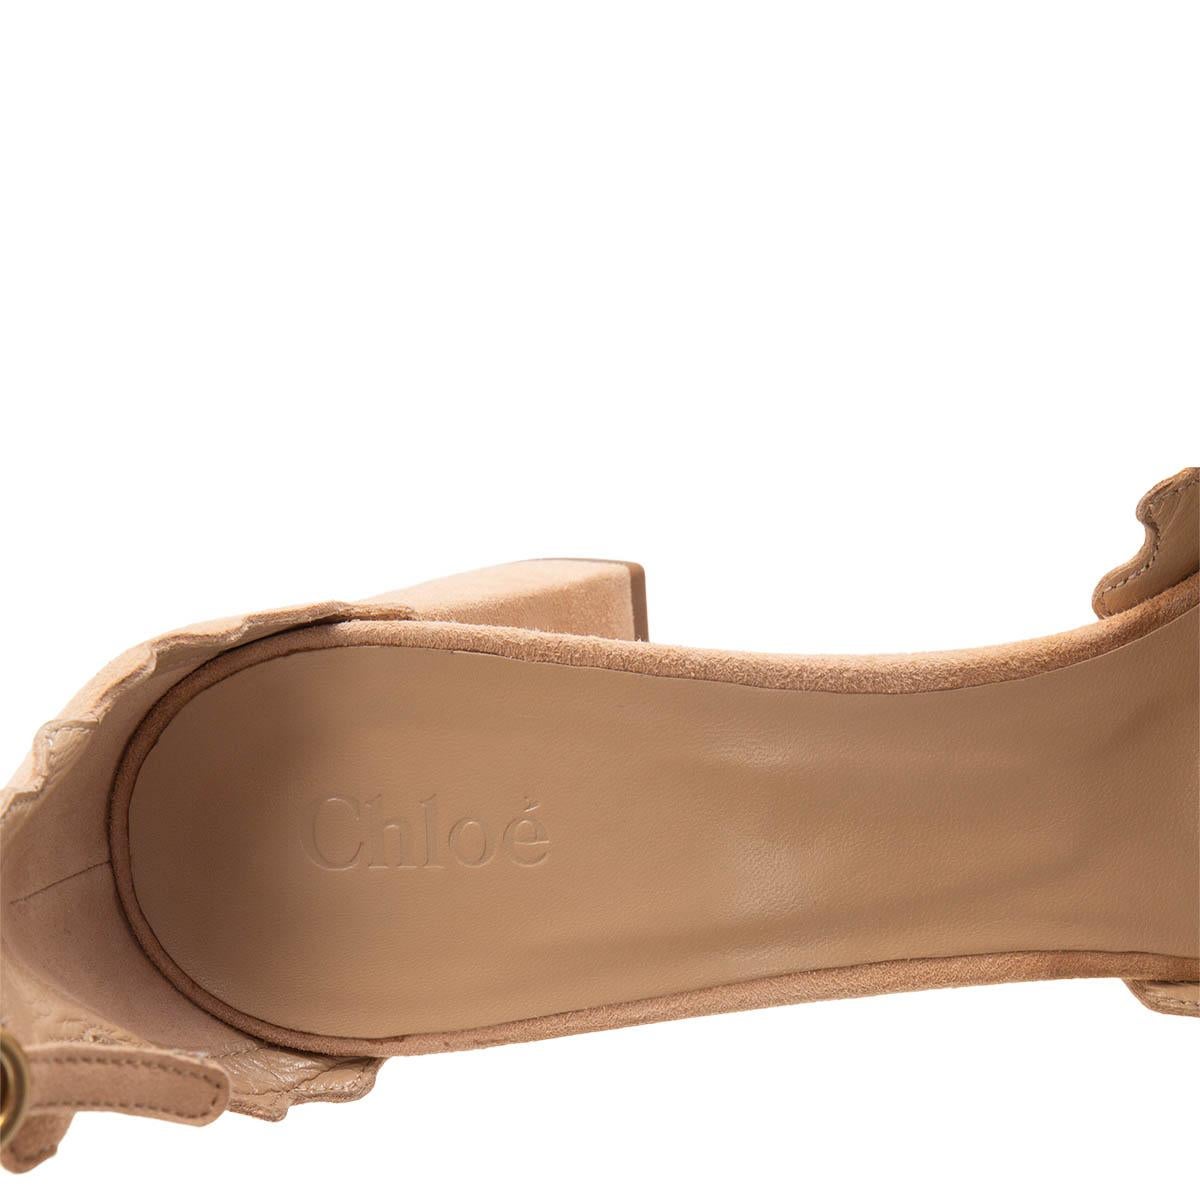 Brown CHLOE nude suede LAUREN ANKLE STRAP Pumps Shoes 40 For Sale